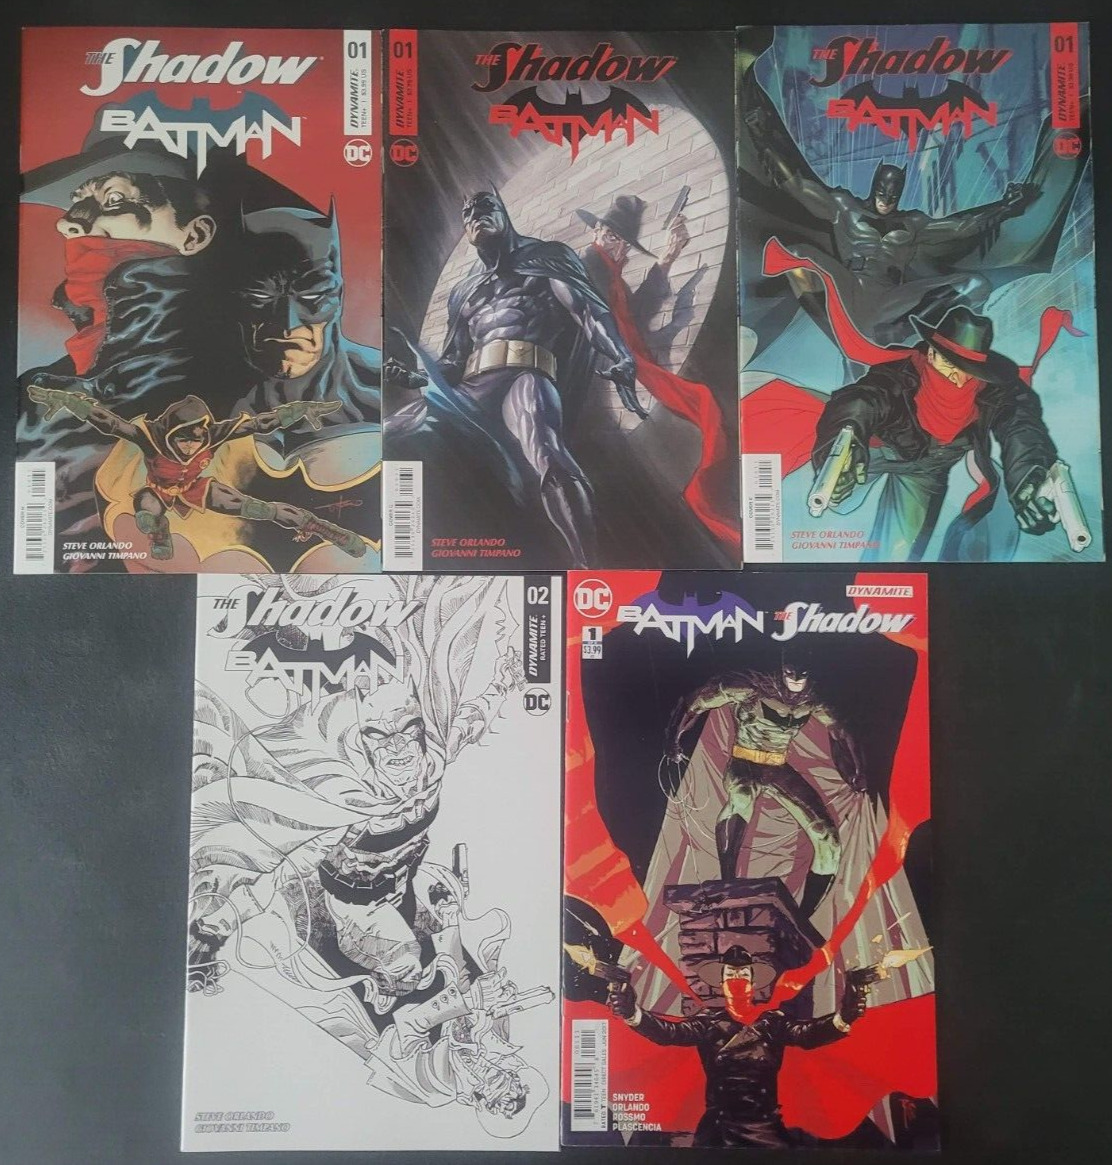 THE SHADOW / BATMAN SET OF 5 ISSUES 2017 DYNAMITE DC COMICS VARIANTS